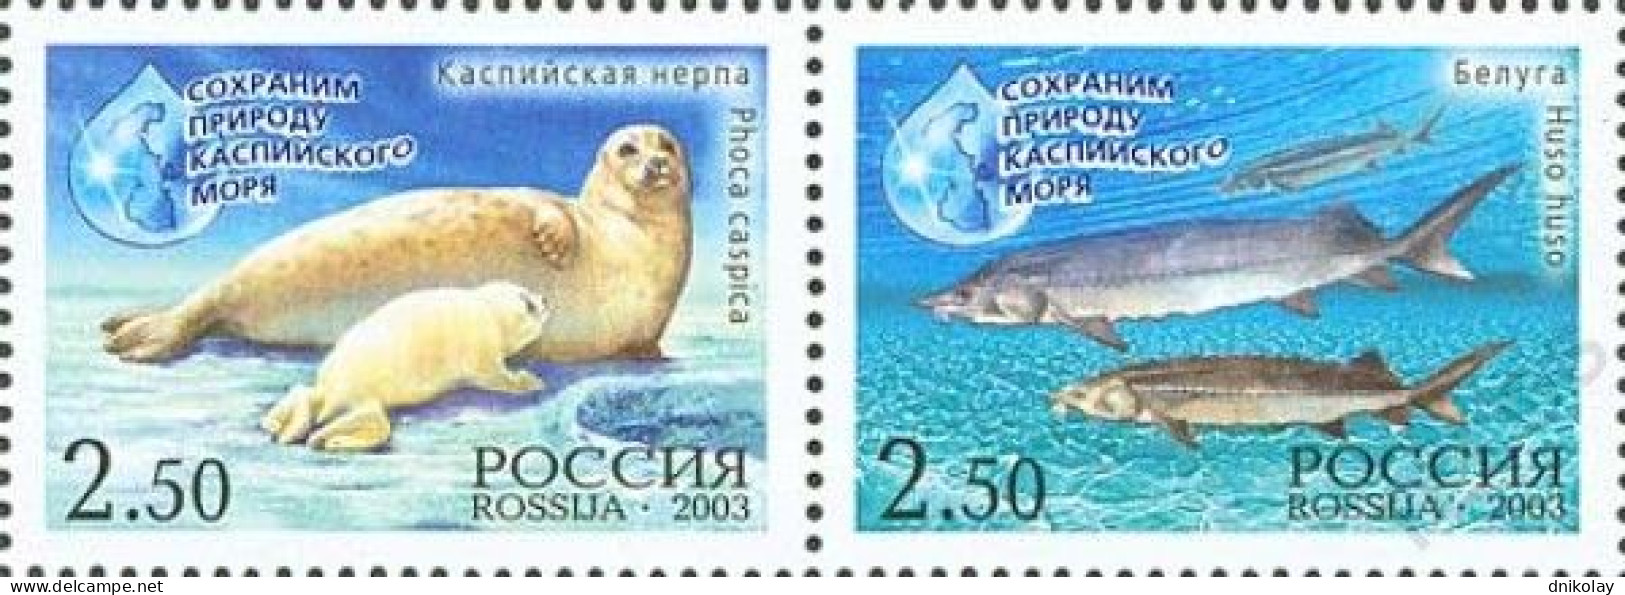 2003 1112 Russia Fauna - Russian-Iranian Joint Issue MNH - Nuovi